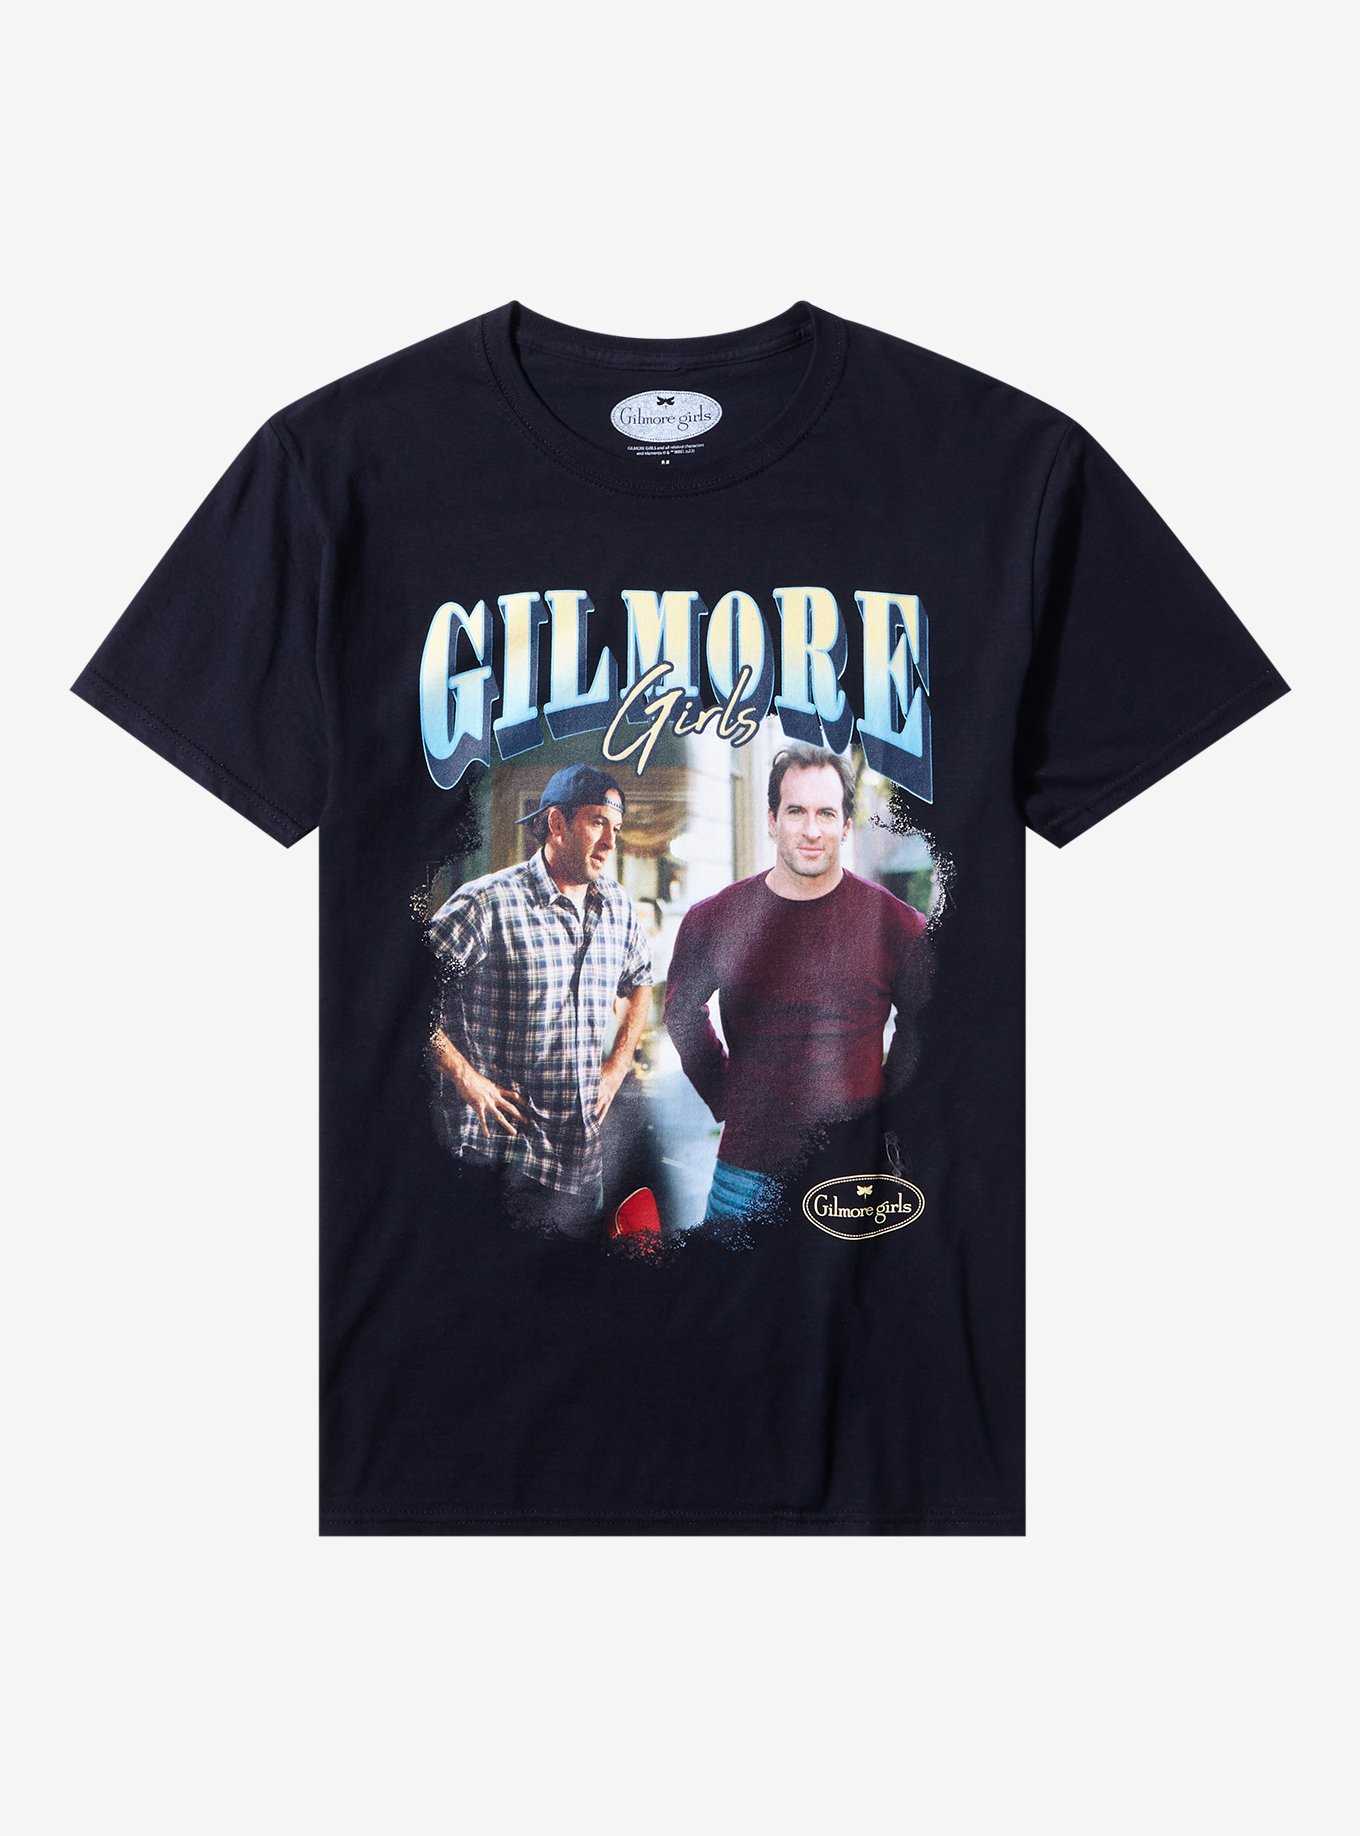 Gilmore Girls Luke Danes Collage Boyfriend Fit Girls T-Shirt, , hi-res